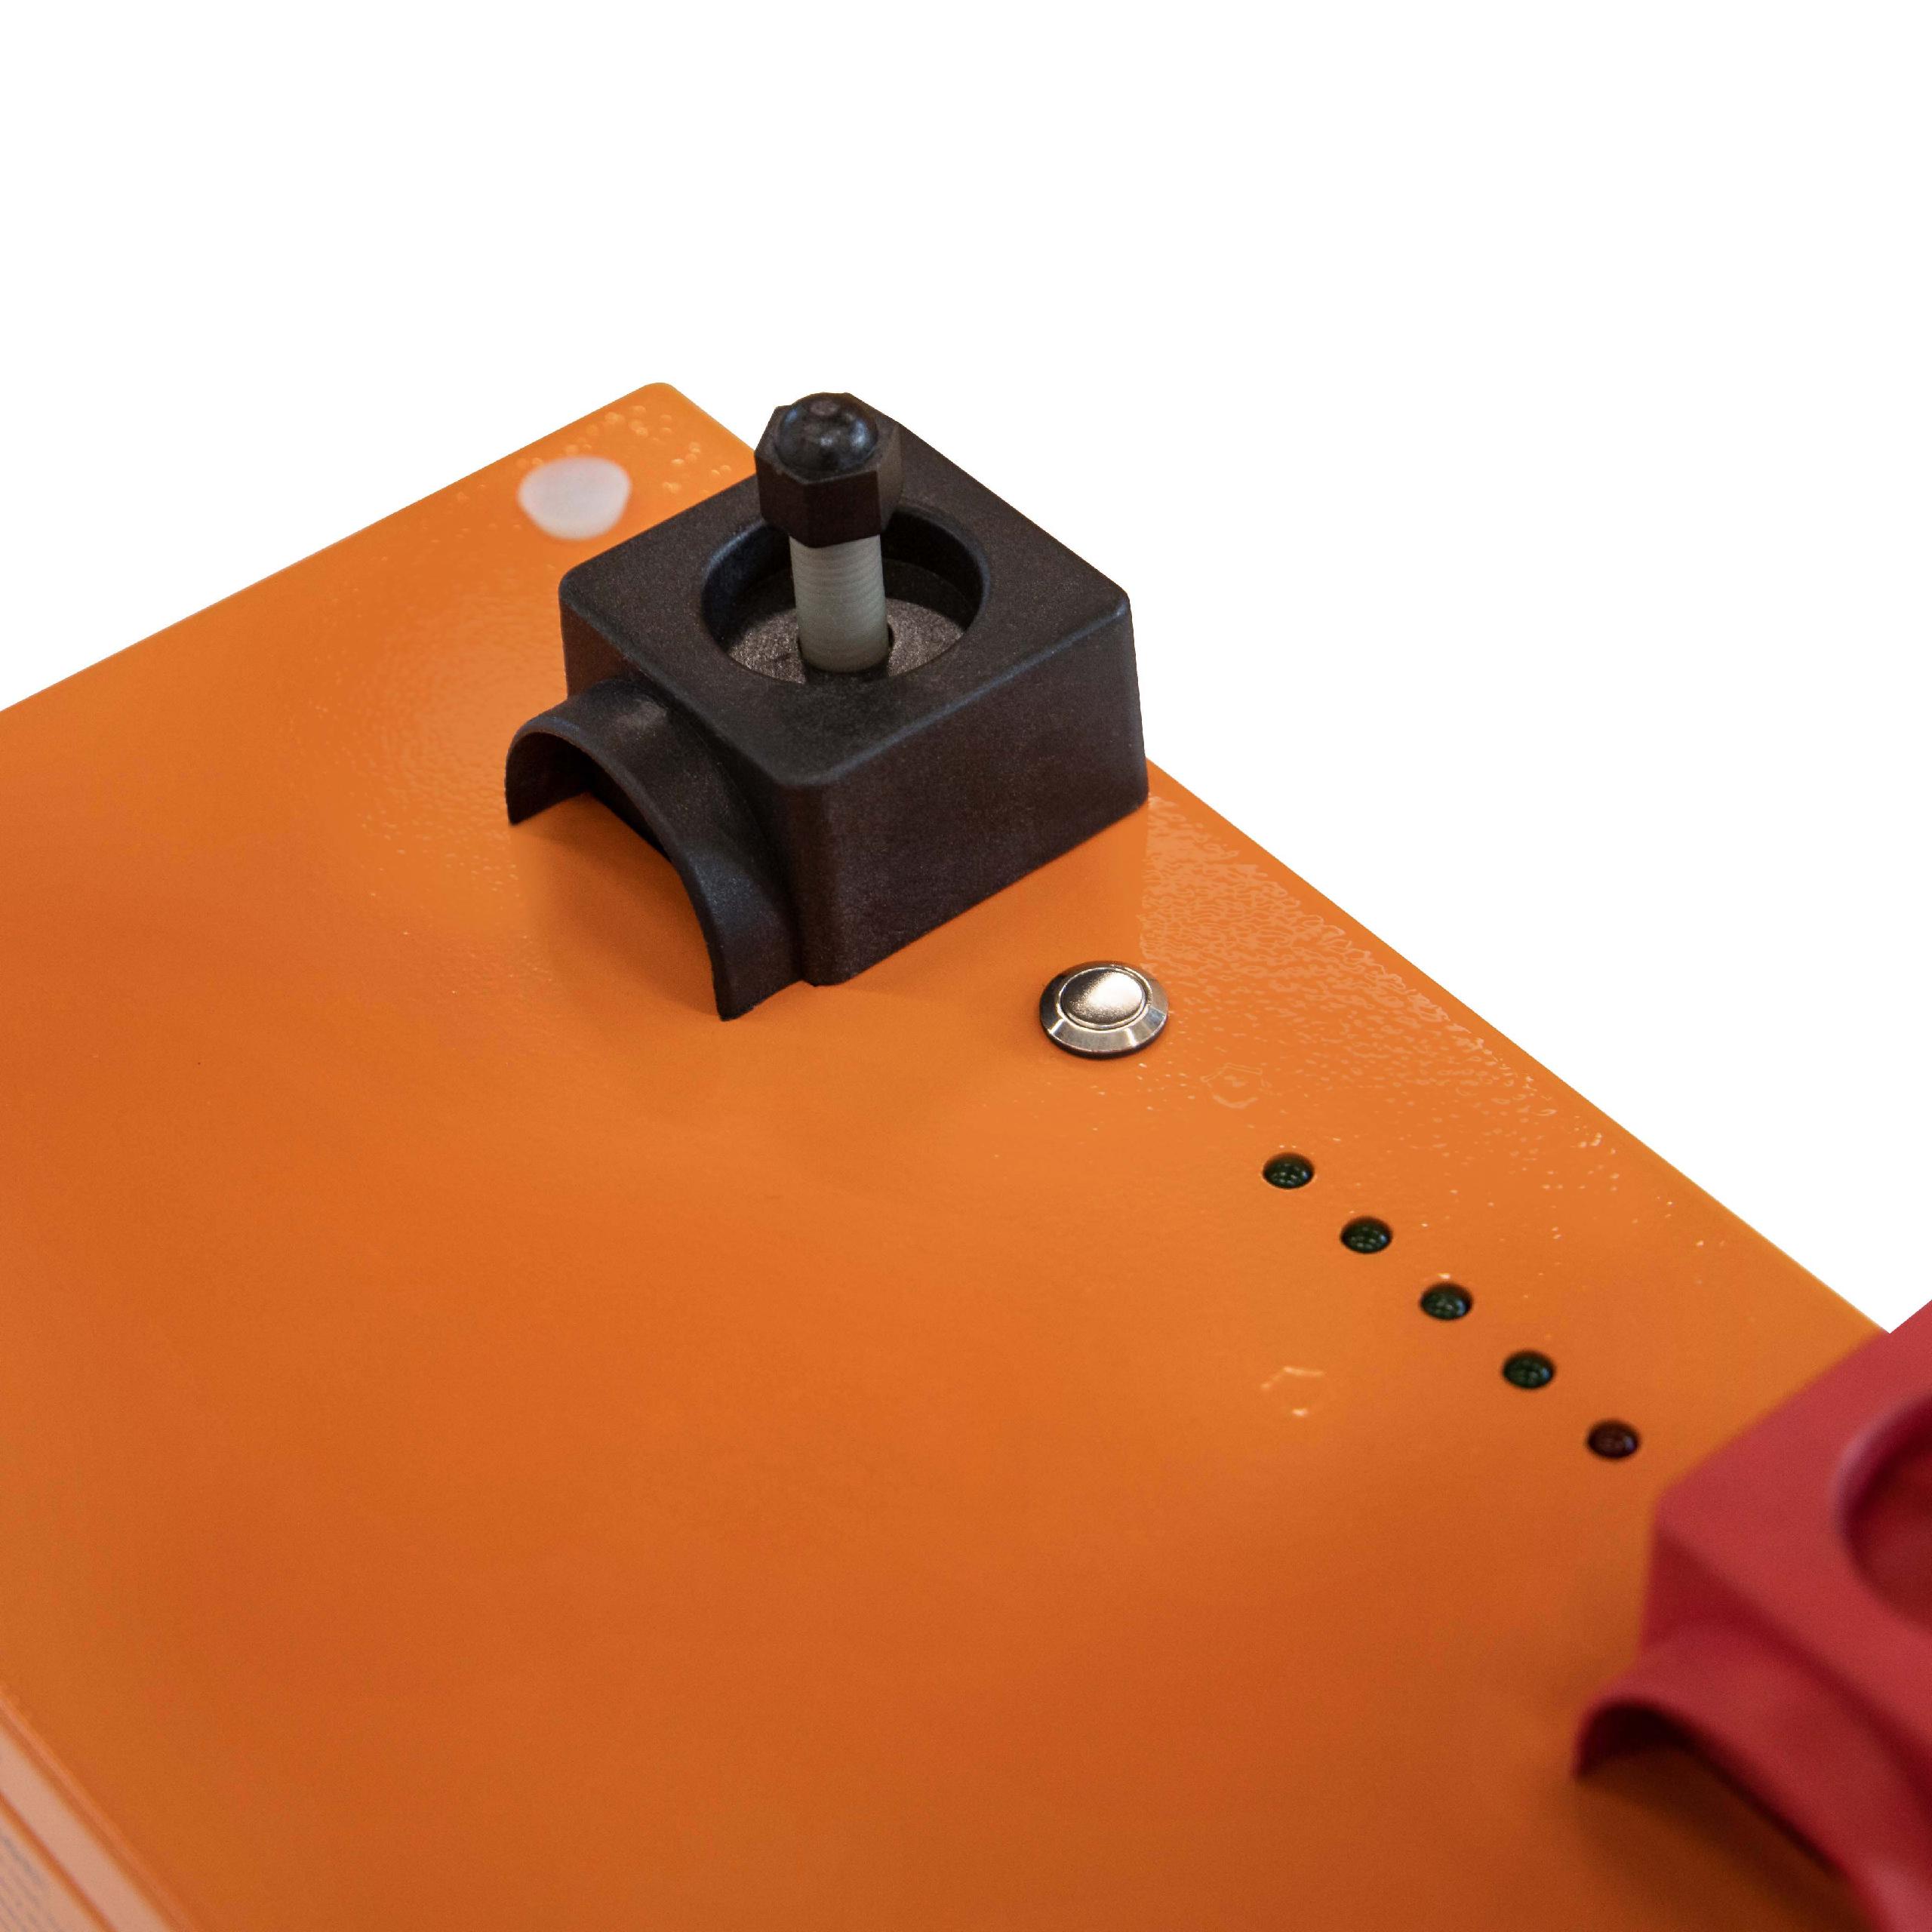 Bordbatterie Akku passend für Wohnmobil, Boot, Solaranlage - 120 Ah 12,8V LiFePO4, 120000mAh, orange